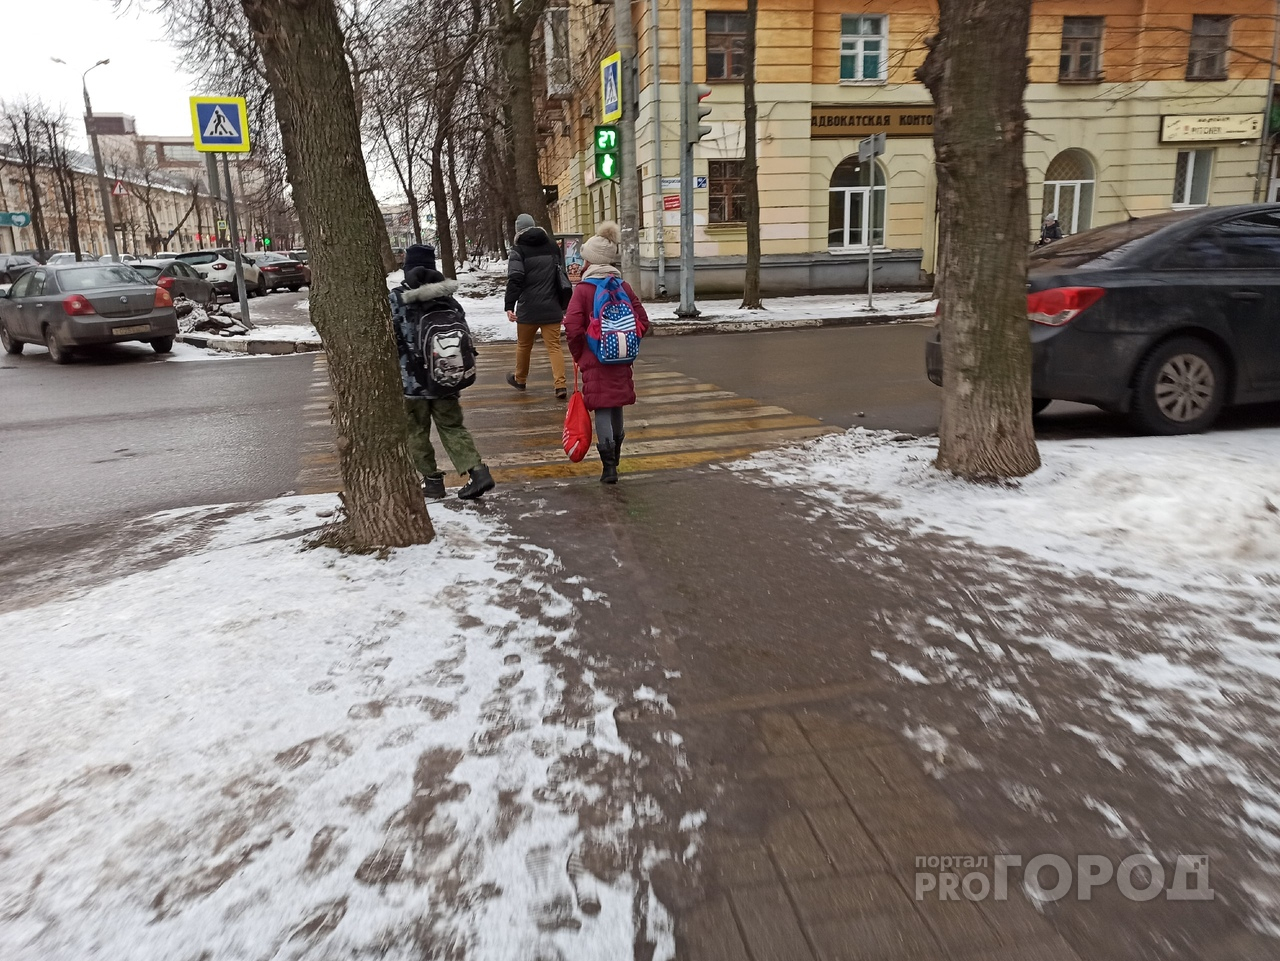 "Сверстники затравят": тренд матчества заставил содрогнуться родителей из Ярославля